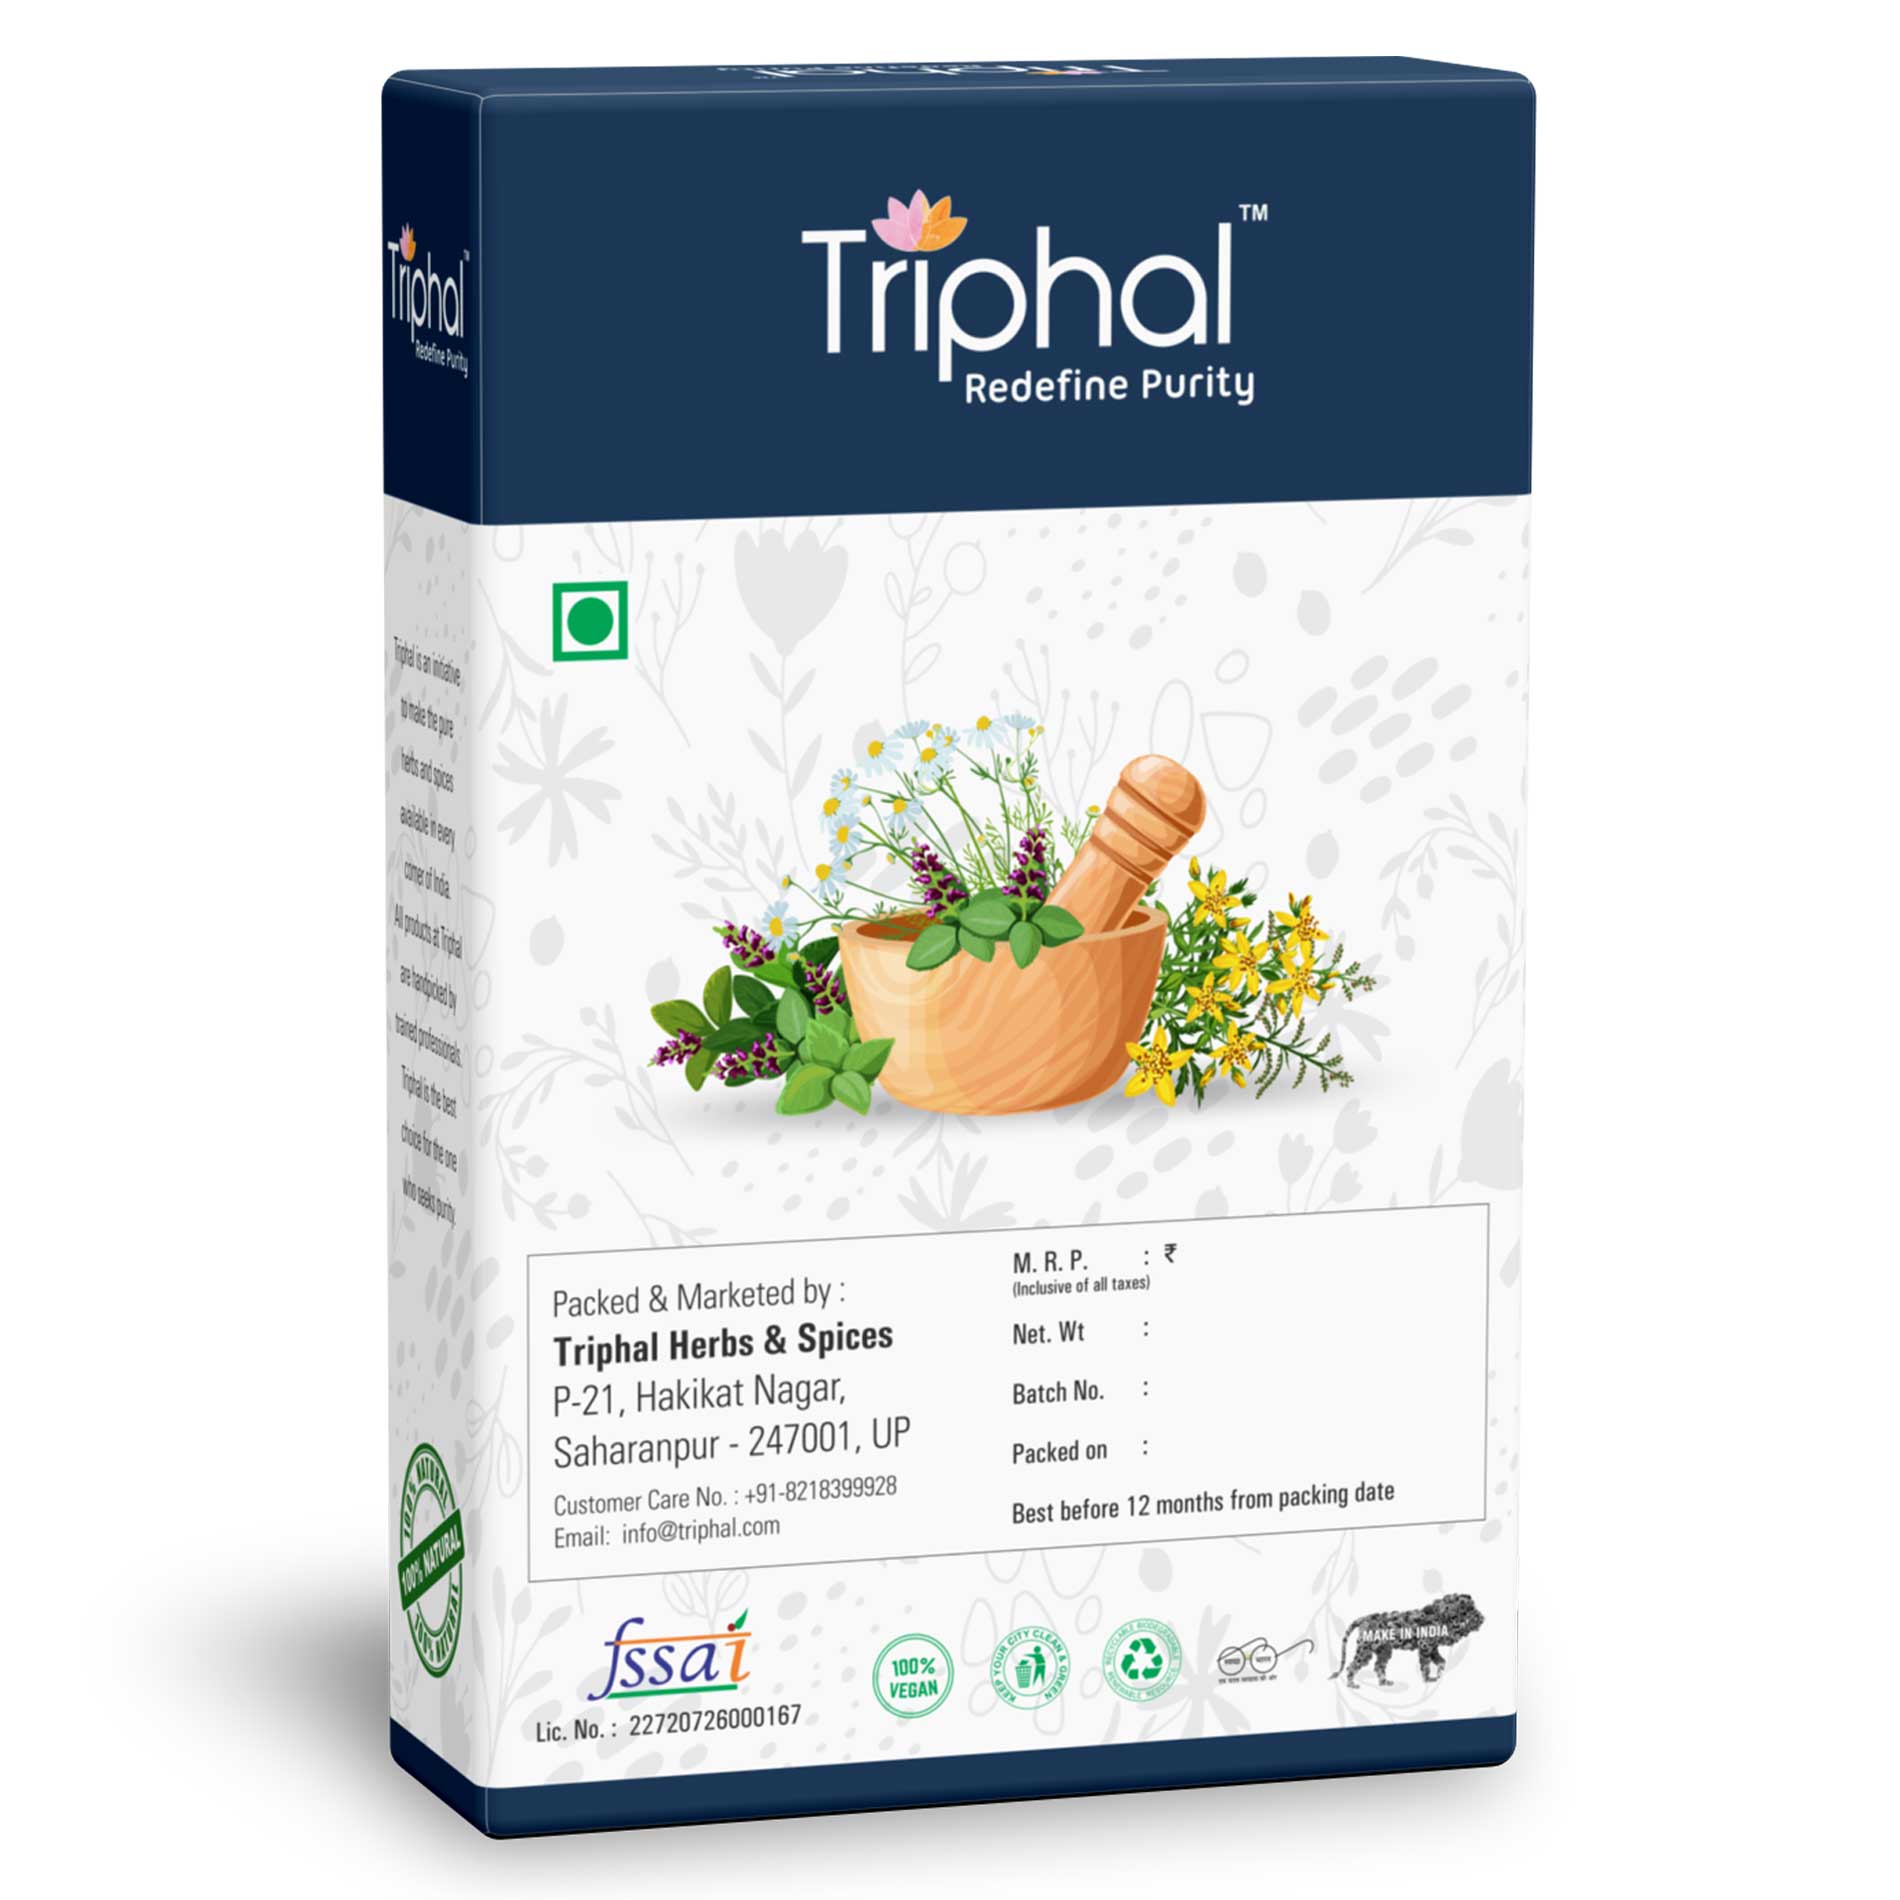 Box of Akarkara Irani Powder - Pellitory Root Powder by Triphal Brand - 100% Pure and Original Aqarqara Powder